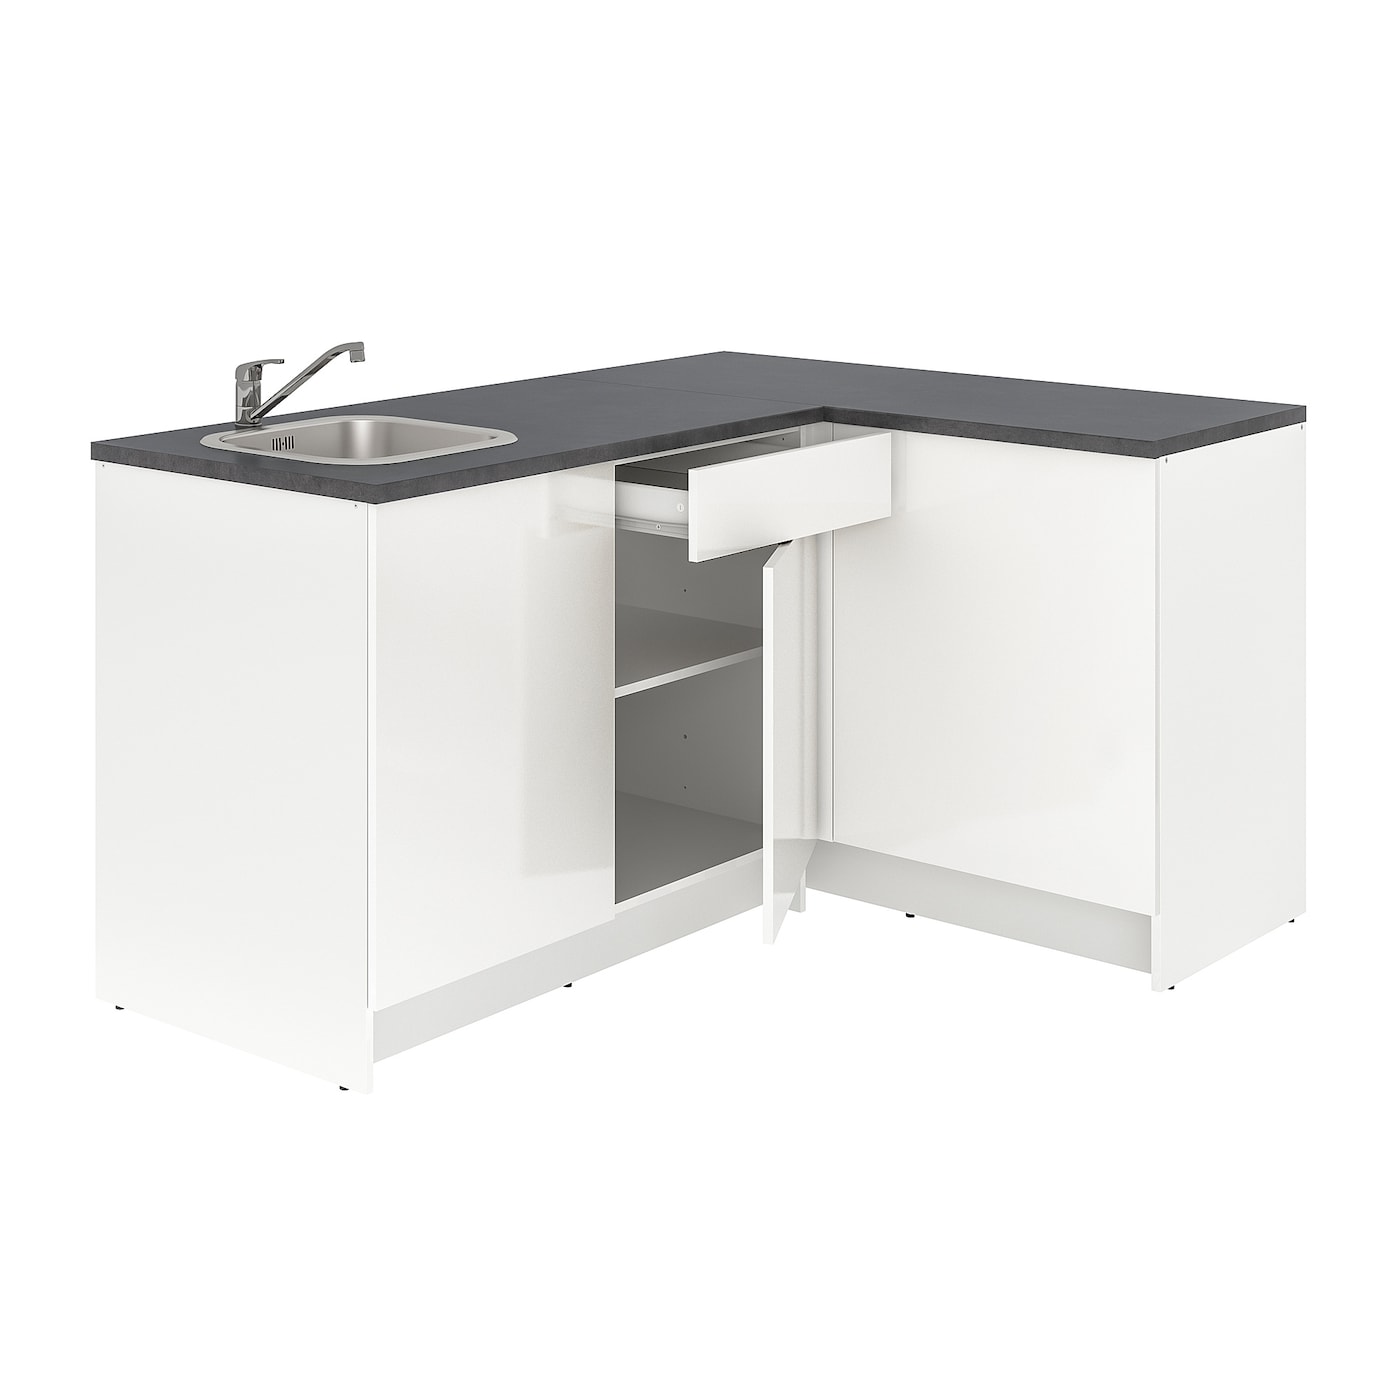 Угловая кухня -  KNOXHULT IKEA/ КНОКСХУЛЬТ ИКЕА, 183х91 см, белый/серый